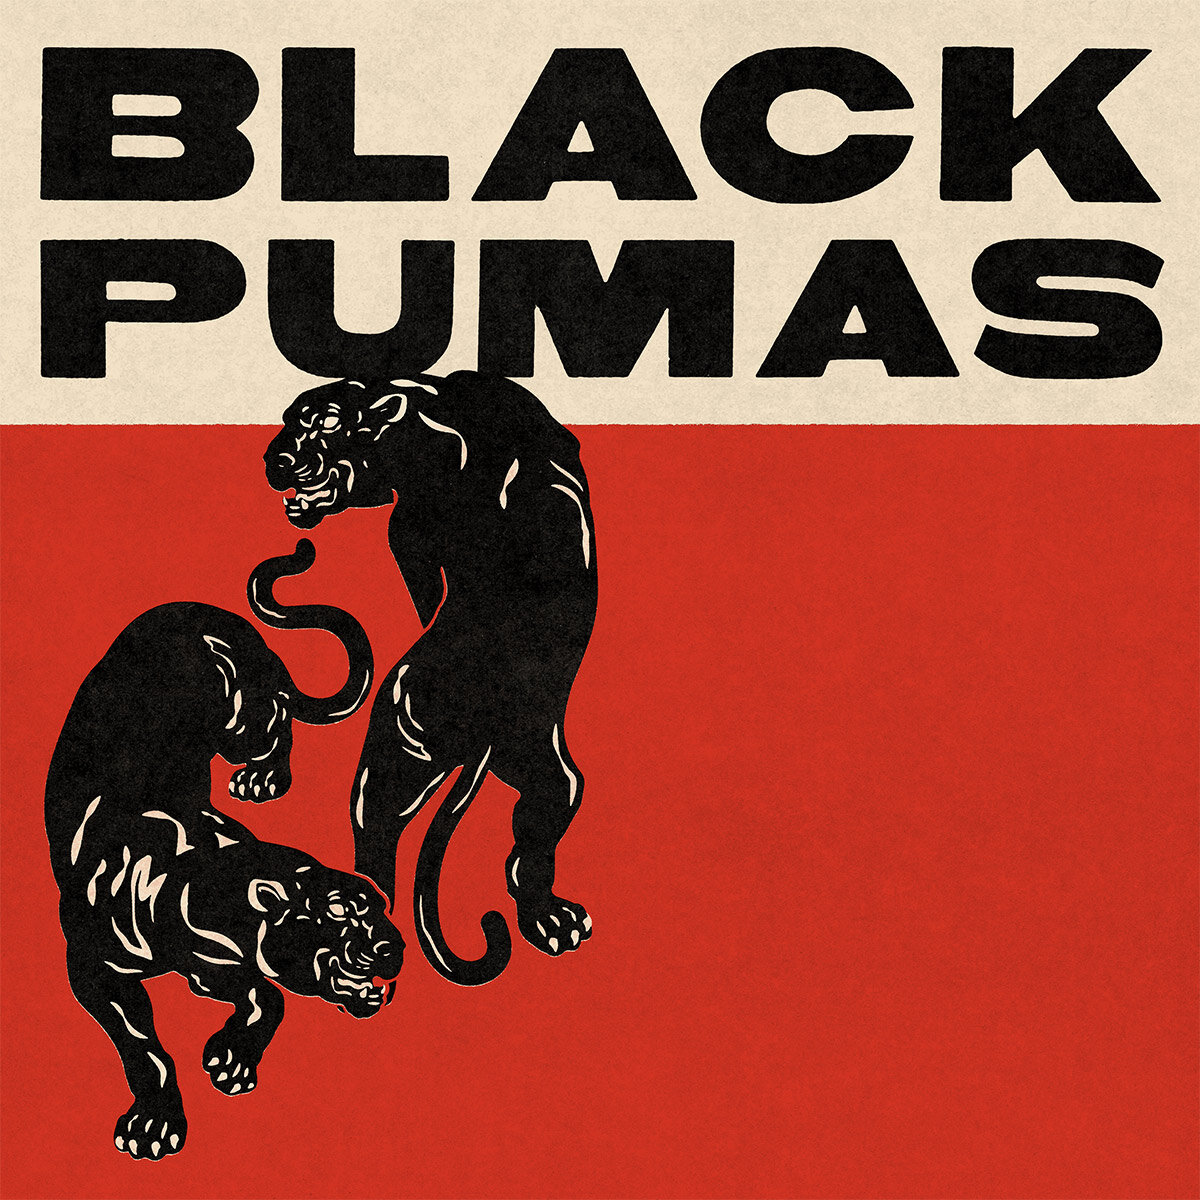 Black Pumas album cover deluxe edition